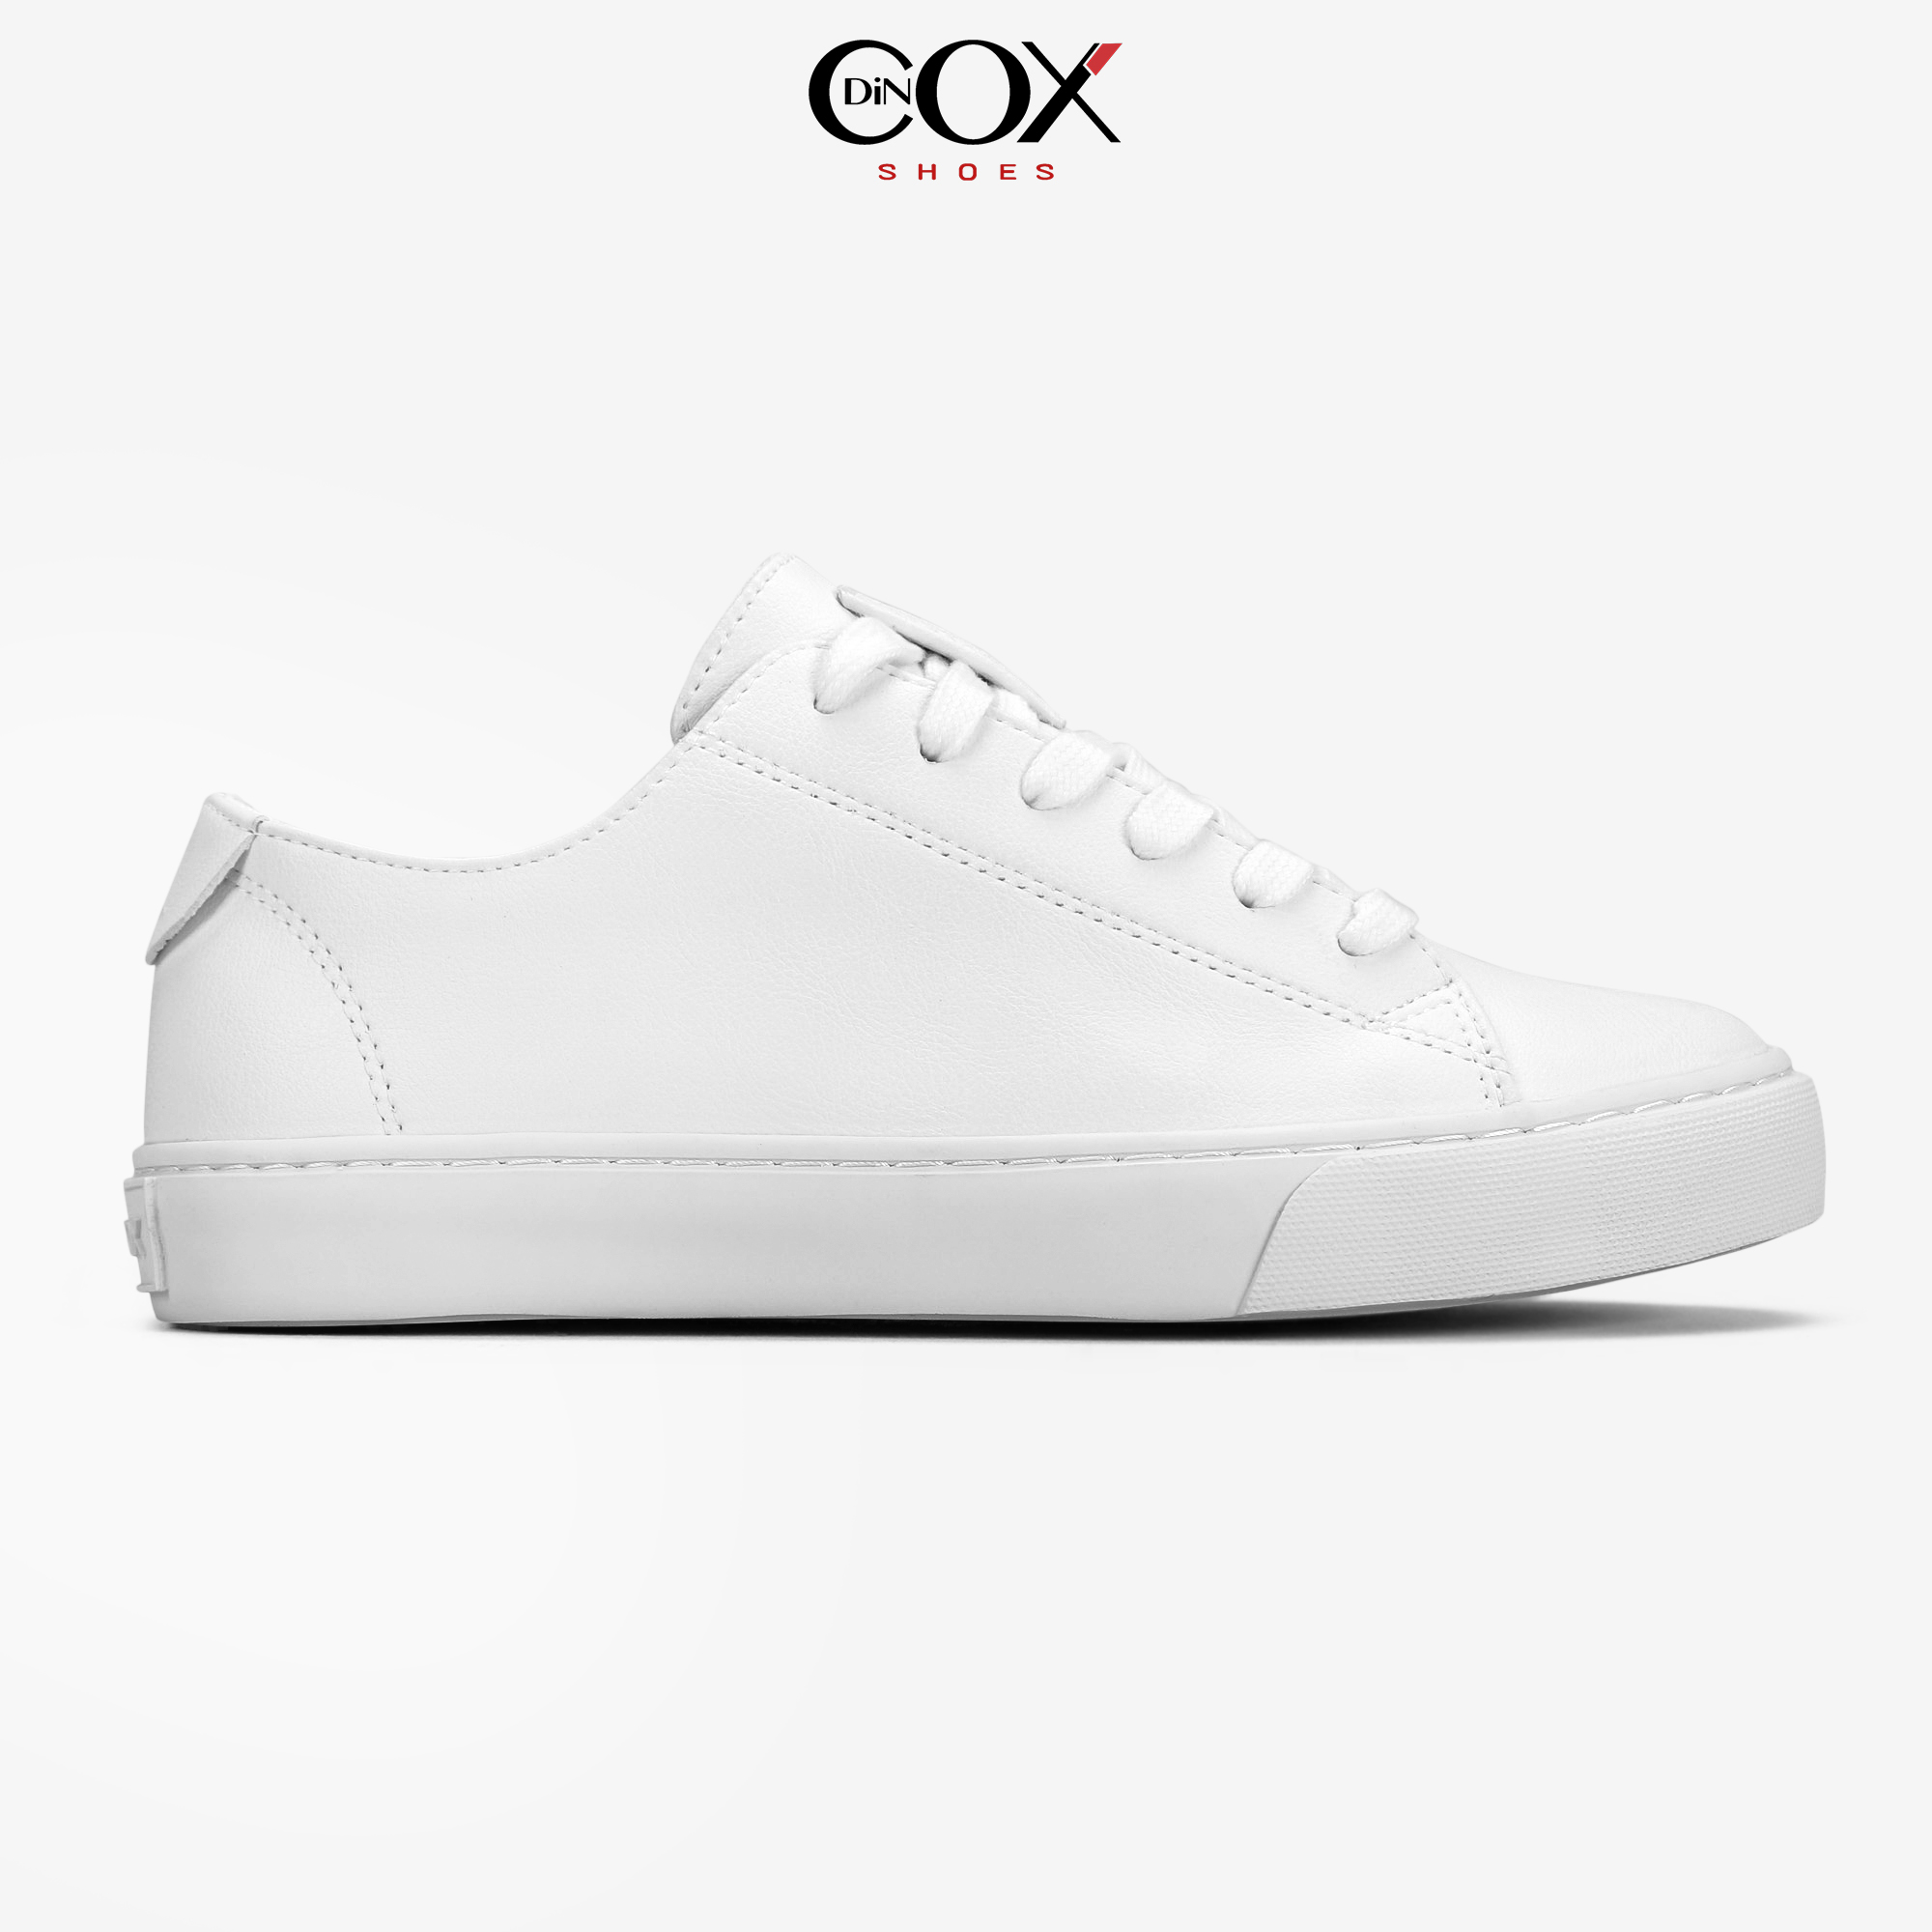 Giày Sneaker Da Unisex Dincox D34 White Unisex Sang Trọng Đơn Giản thumbnail